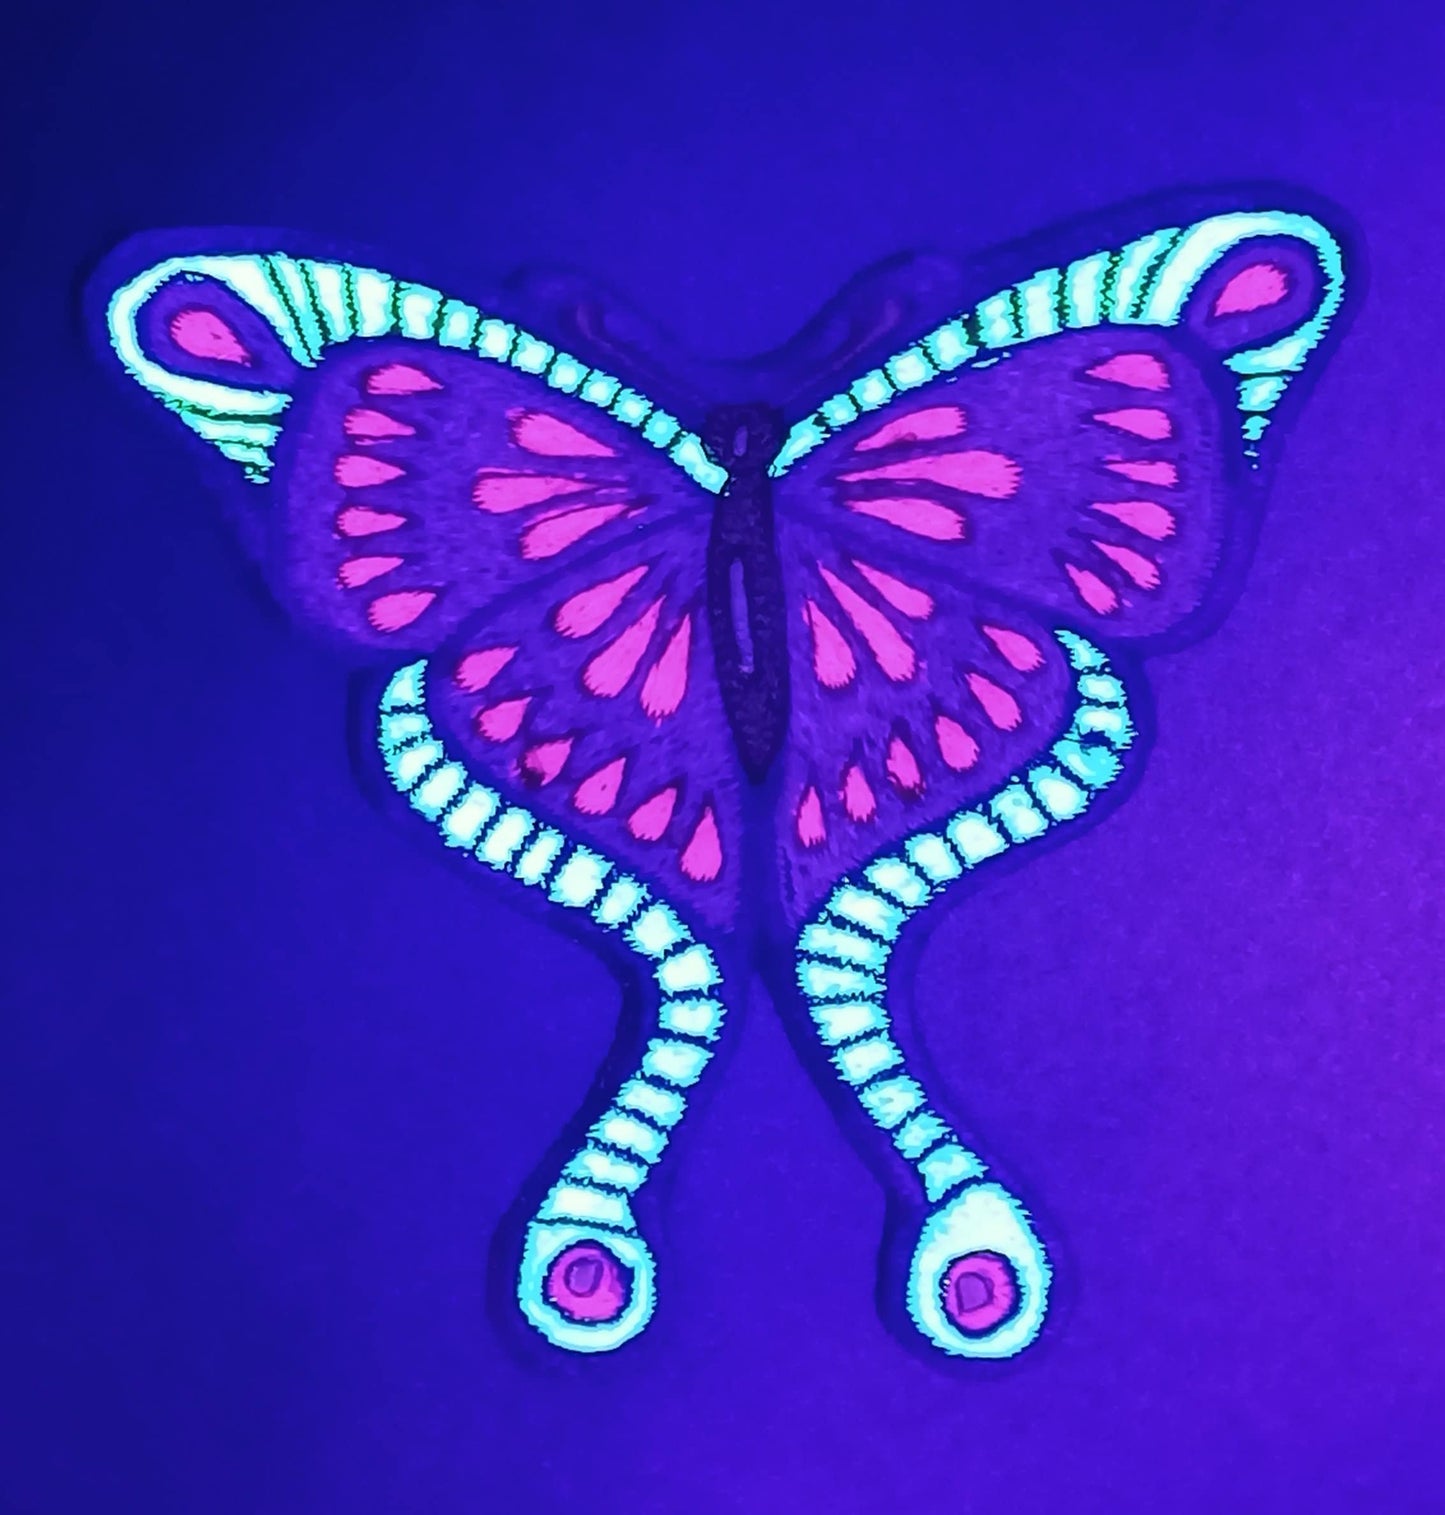 Purple UV glowing Butterfly embroidery patch Goa Trance beautiful Hippie Spirit Psytrance Art handmade blacklight UV shining for sew on